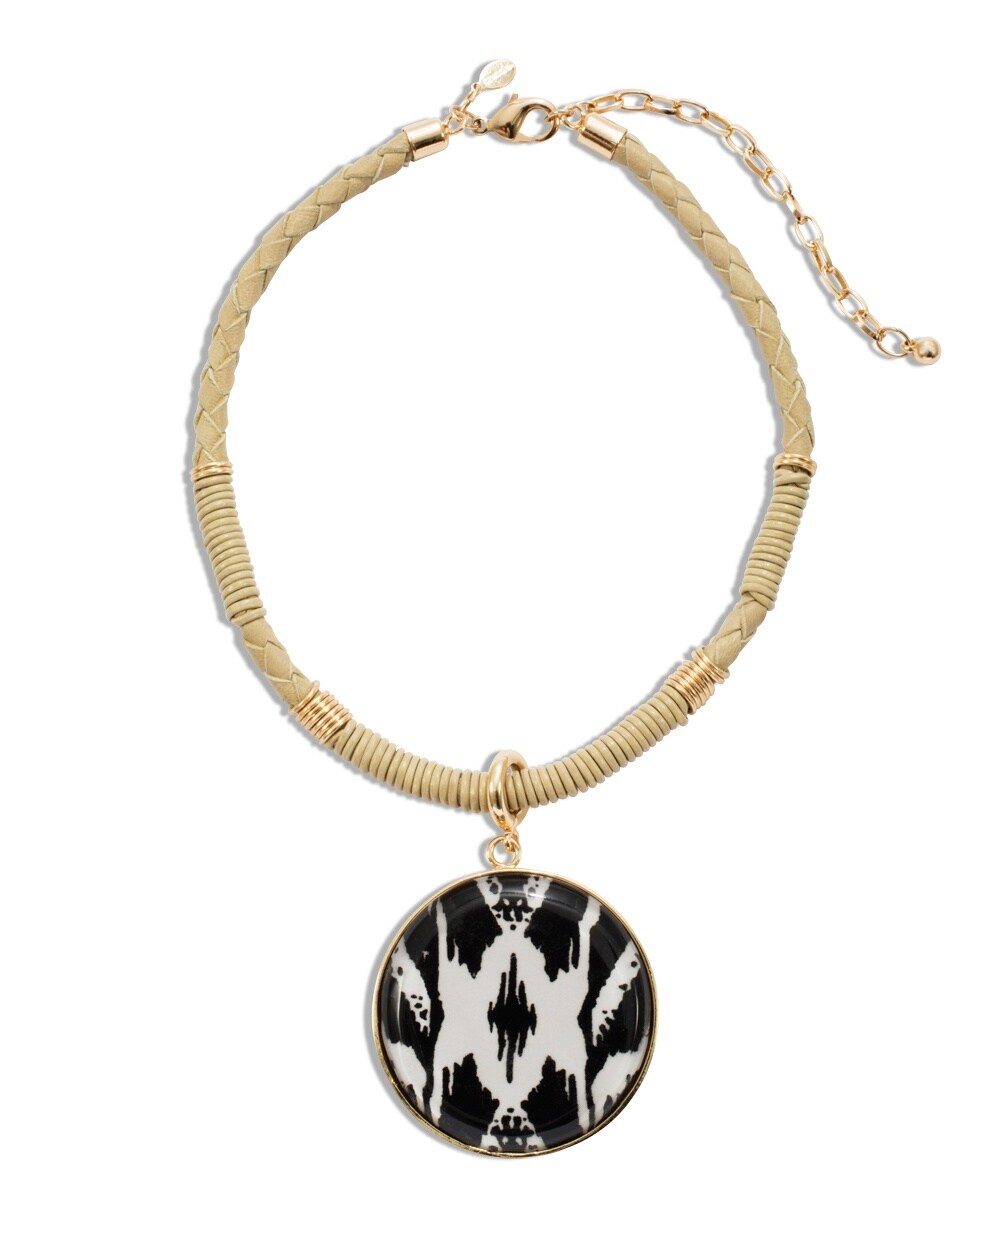 Farrah Black-and-White Pendant Necklace